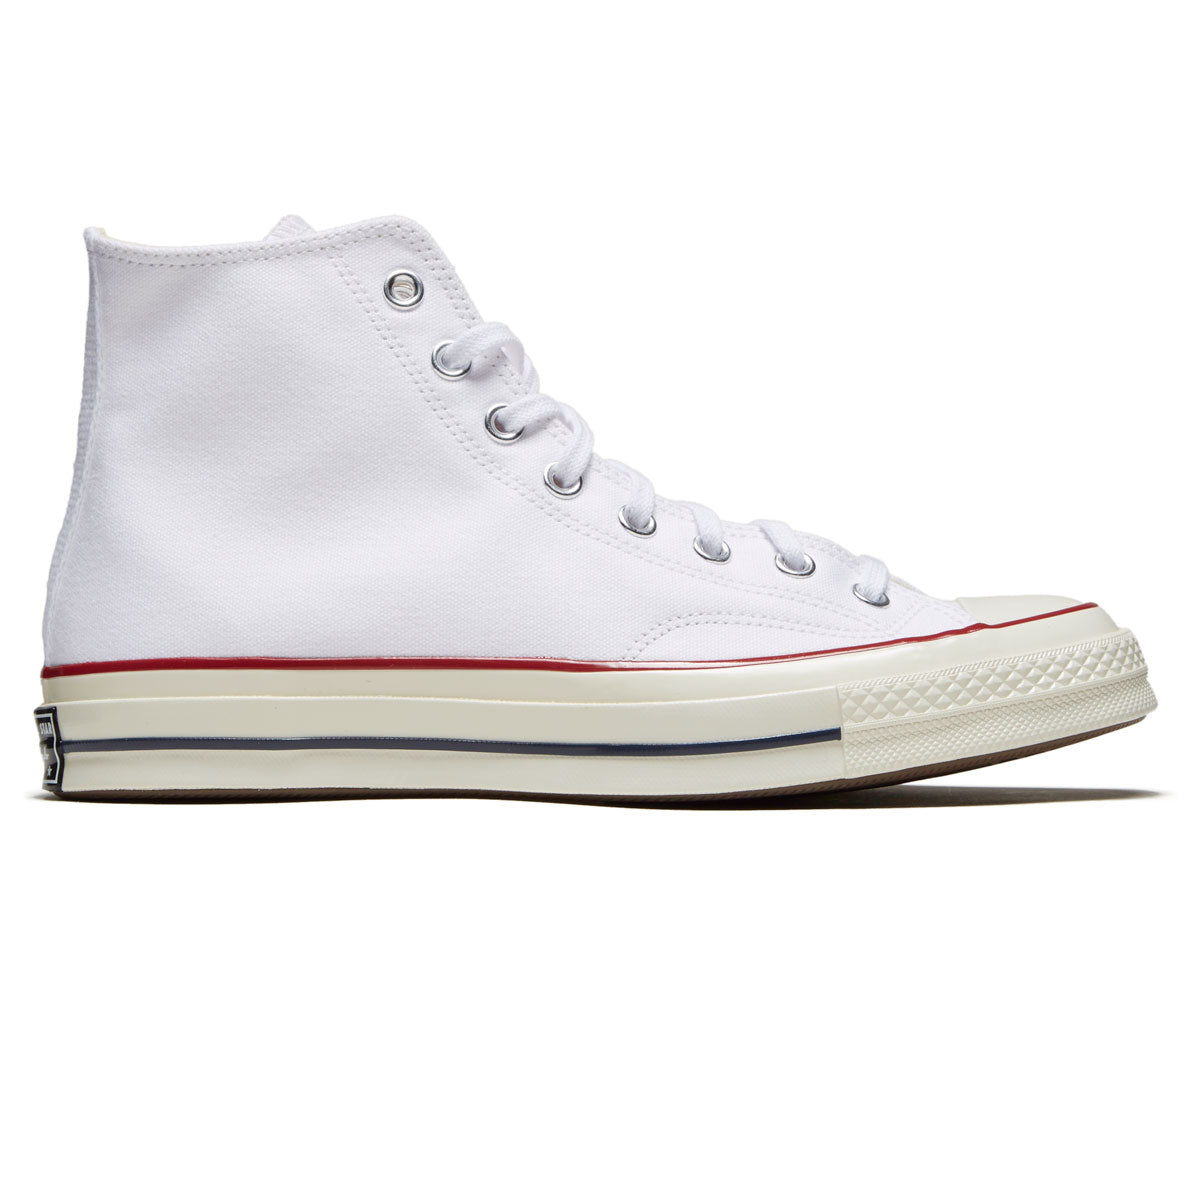 Converse Chuck 70 Hi Shoes - White/Garnet/Egret image 1